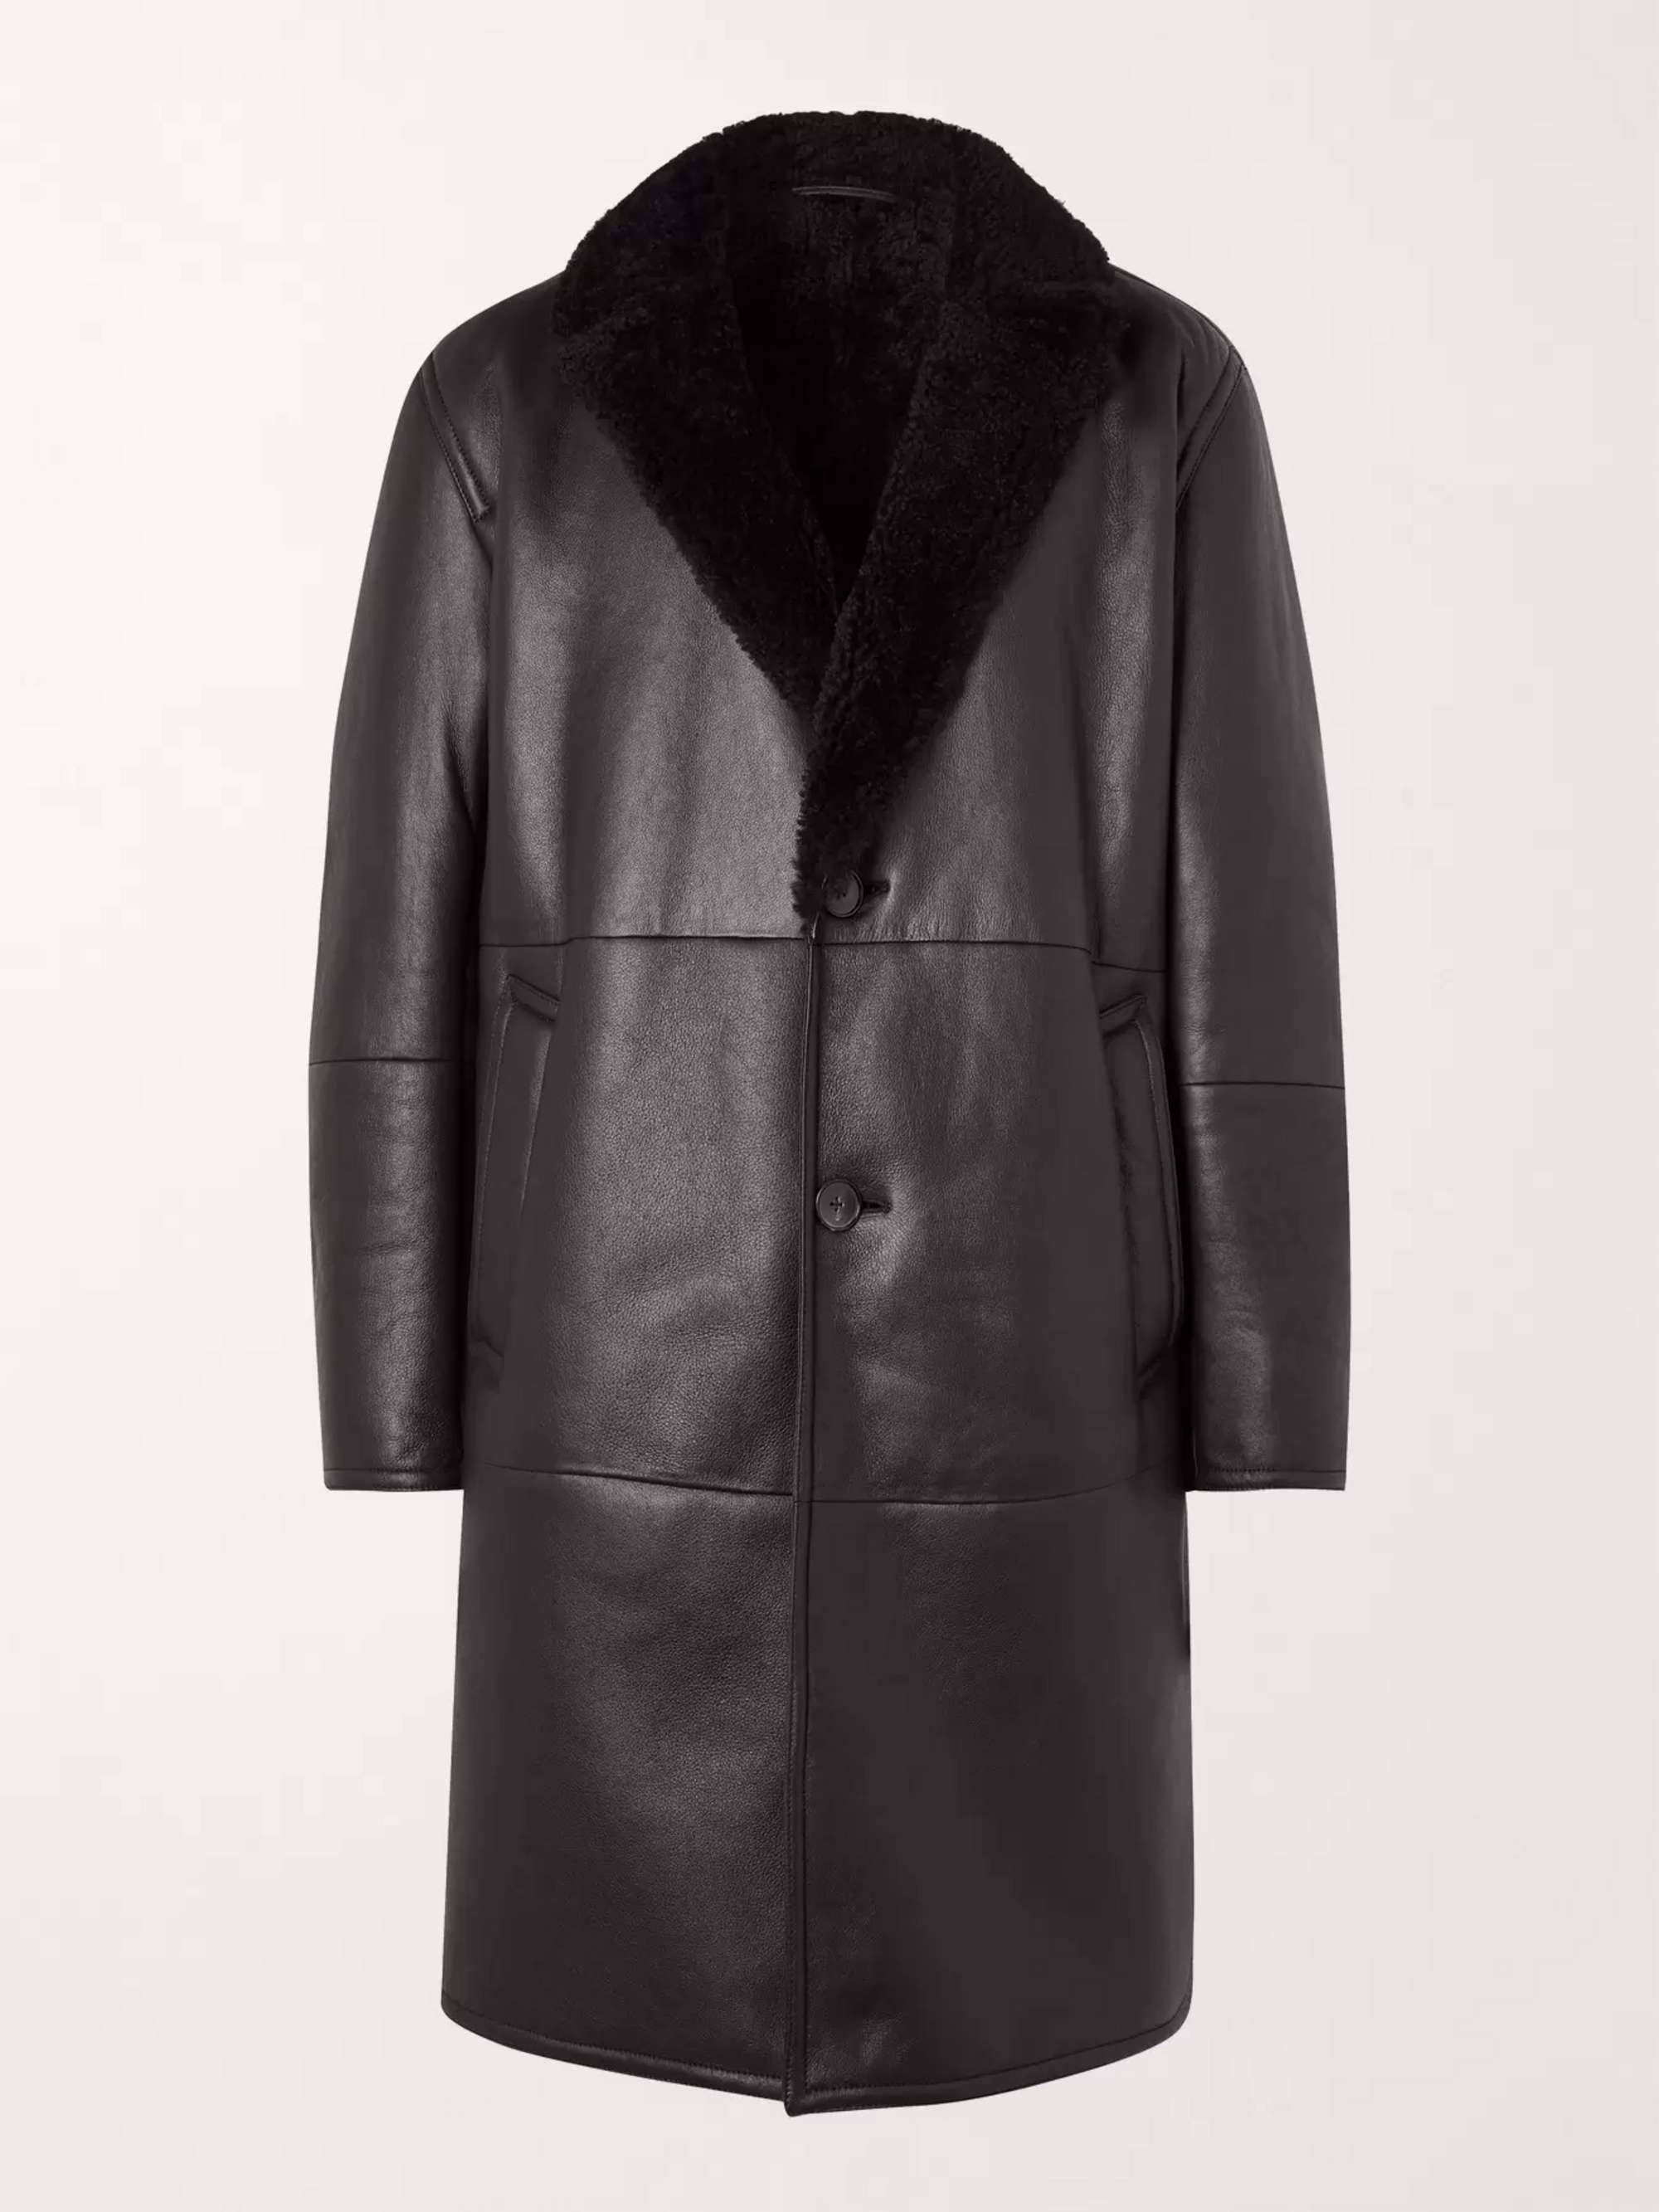 MR P. Shearling-Lined Leather Coat for Men | MR PORTER